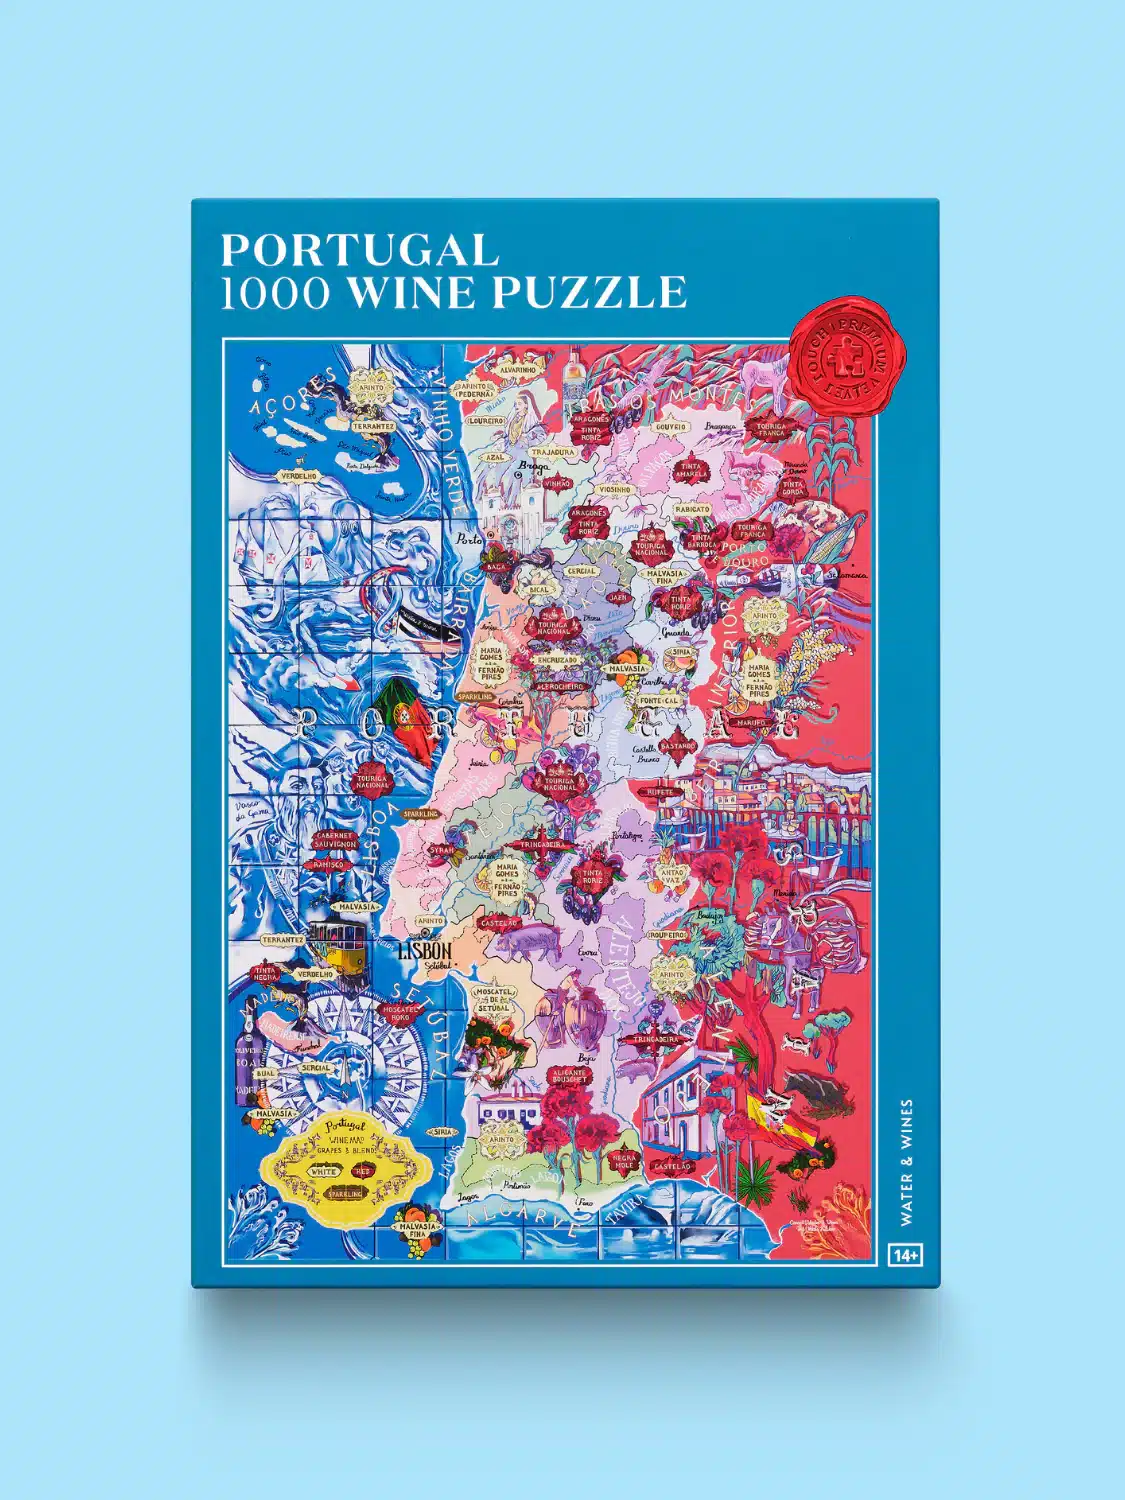 Omslagsbild för “Wine Puzzle Portugal 1000 bitar”